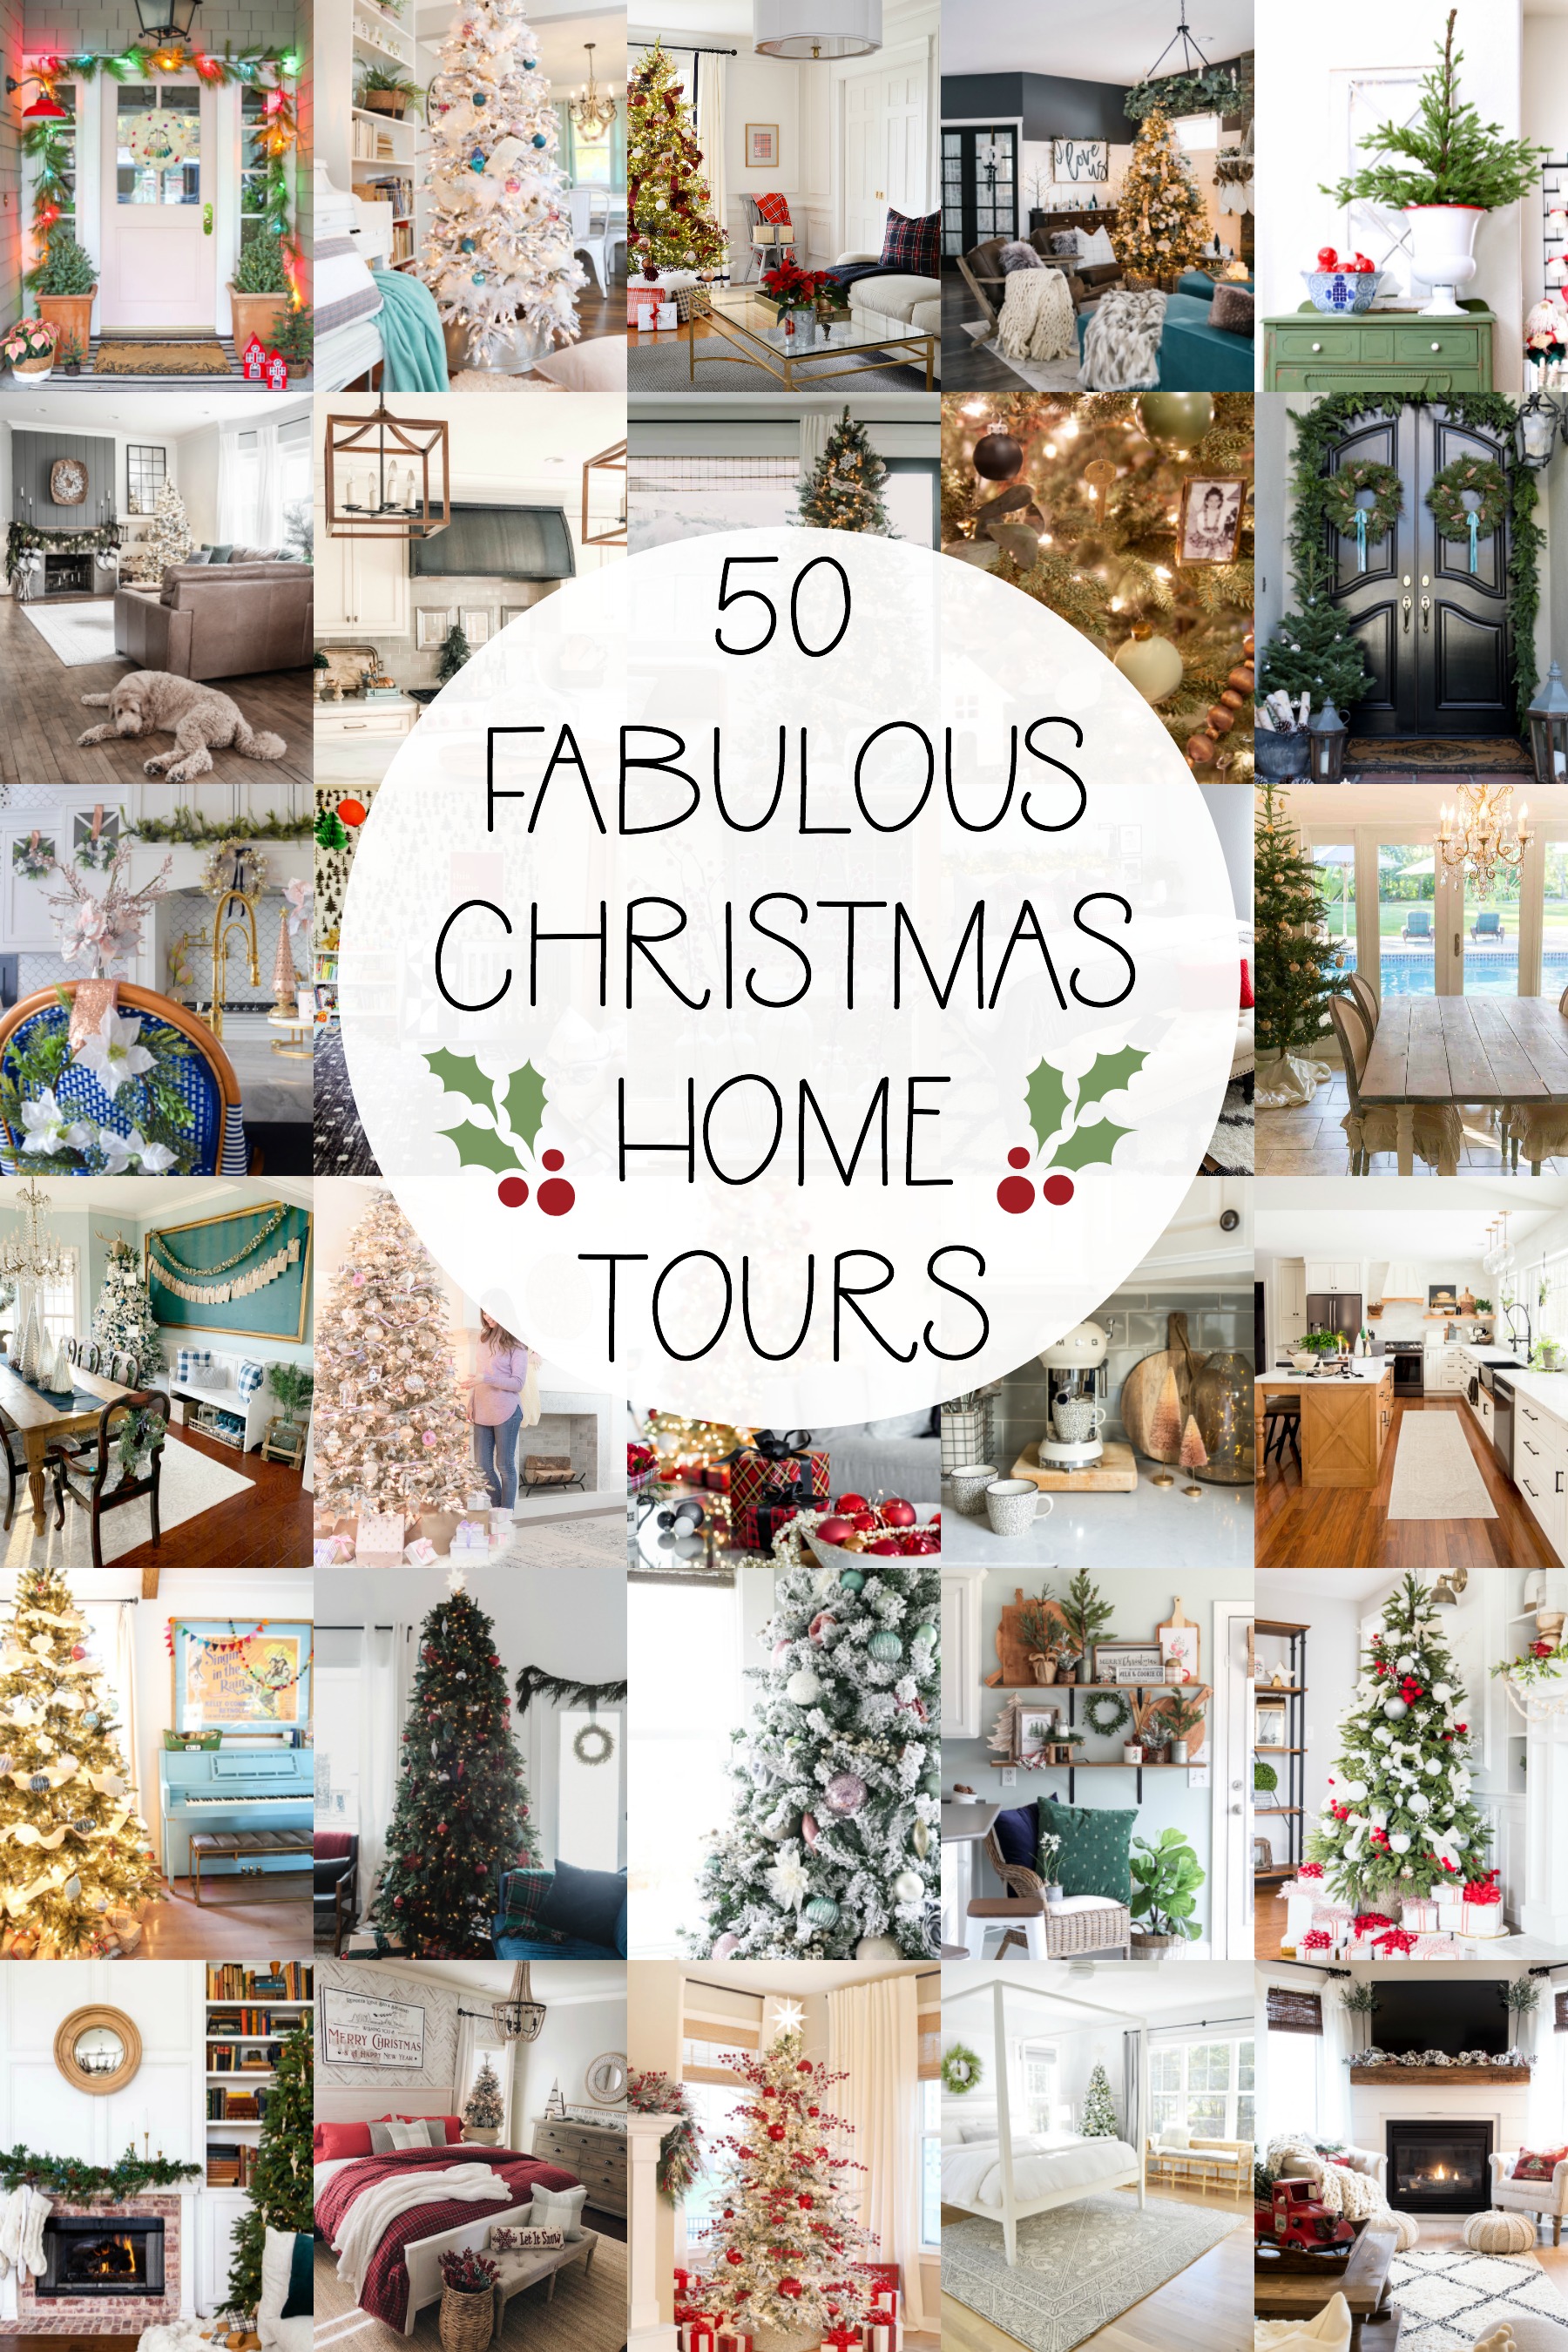 50 fabulous Chrismtas Home Tours graphic.